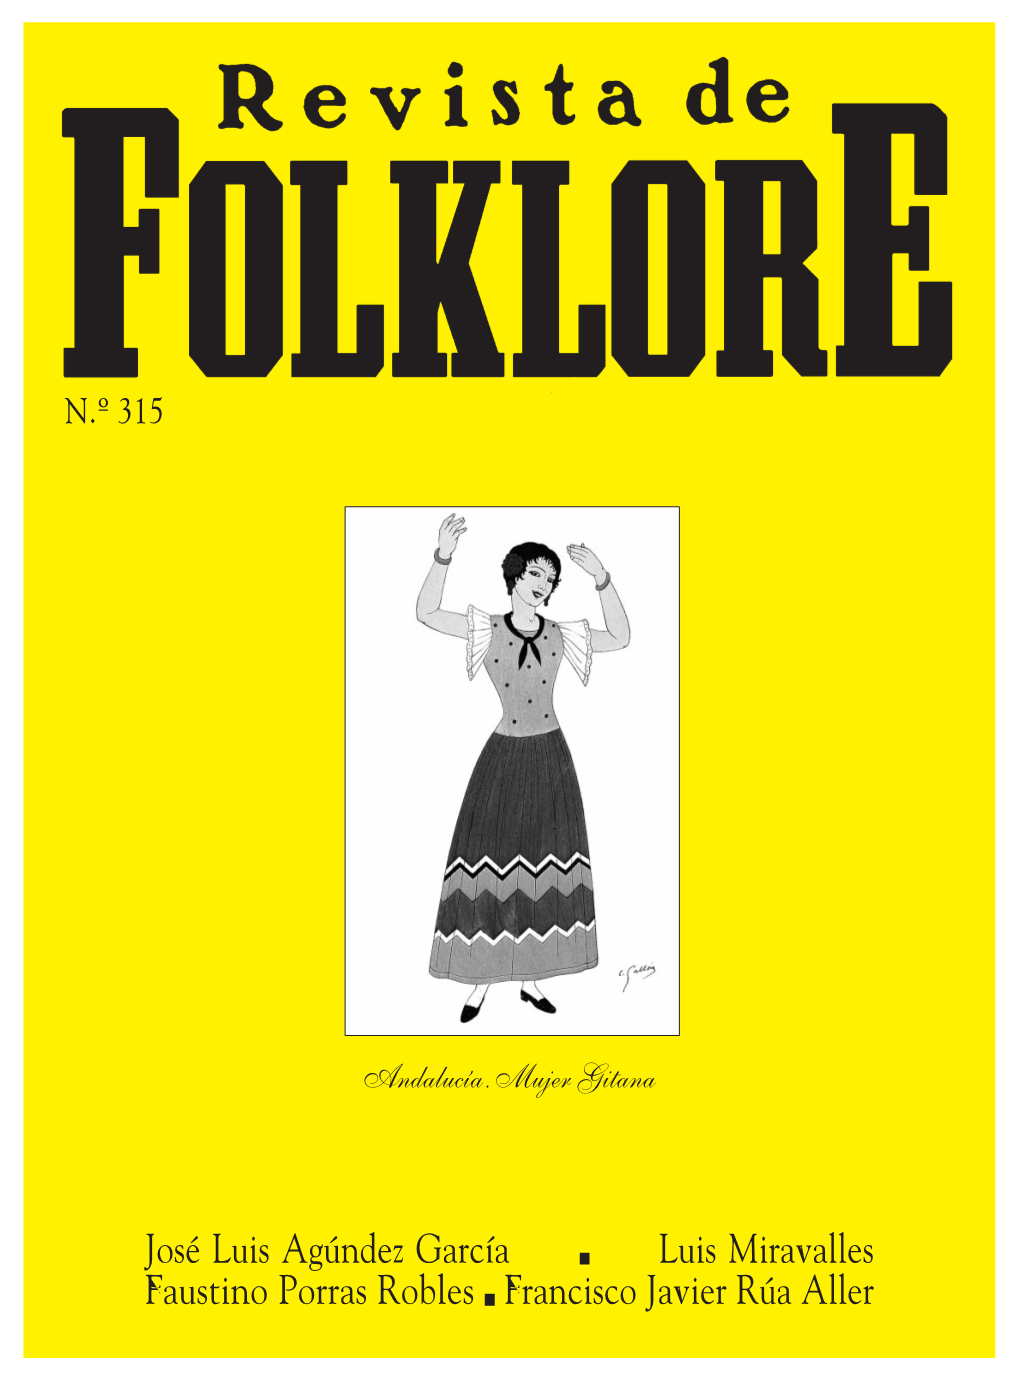 Folklore-Revista N¼315